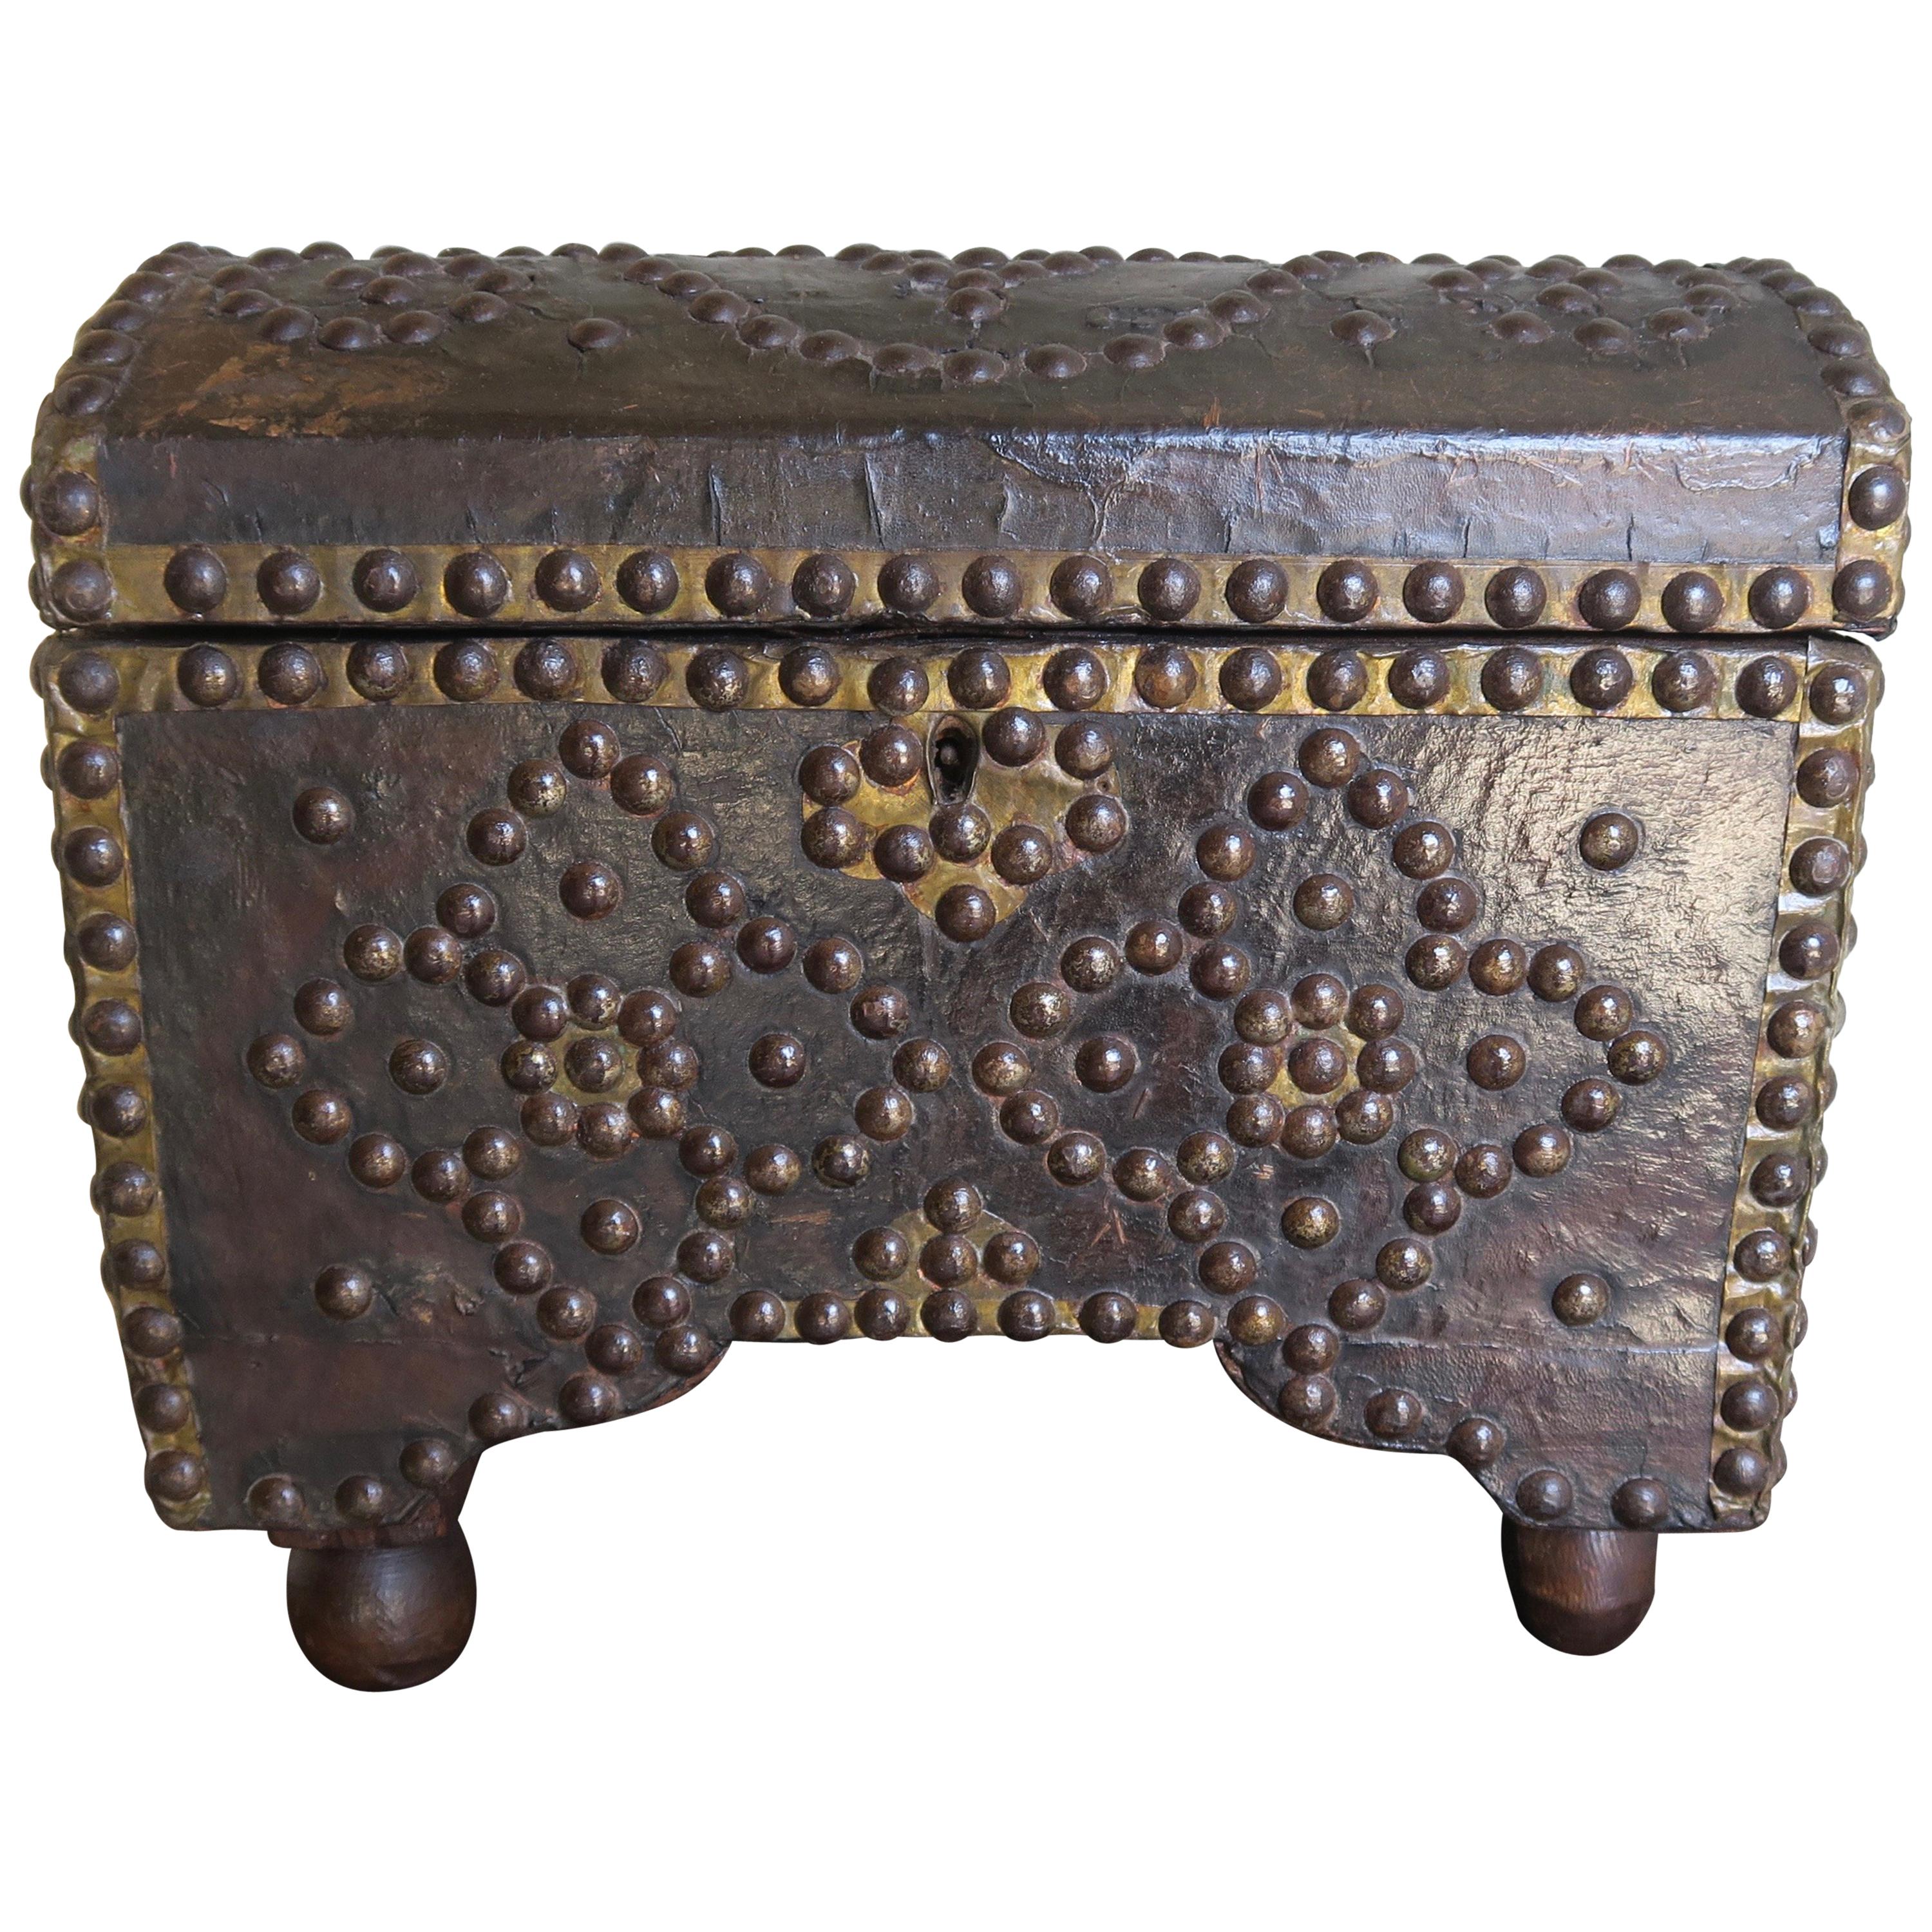 19th Century Spanish Leather Studded Box